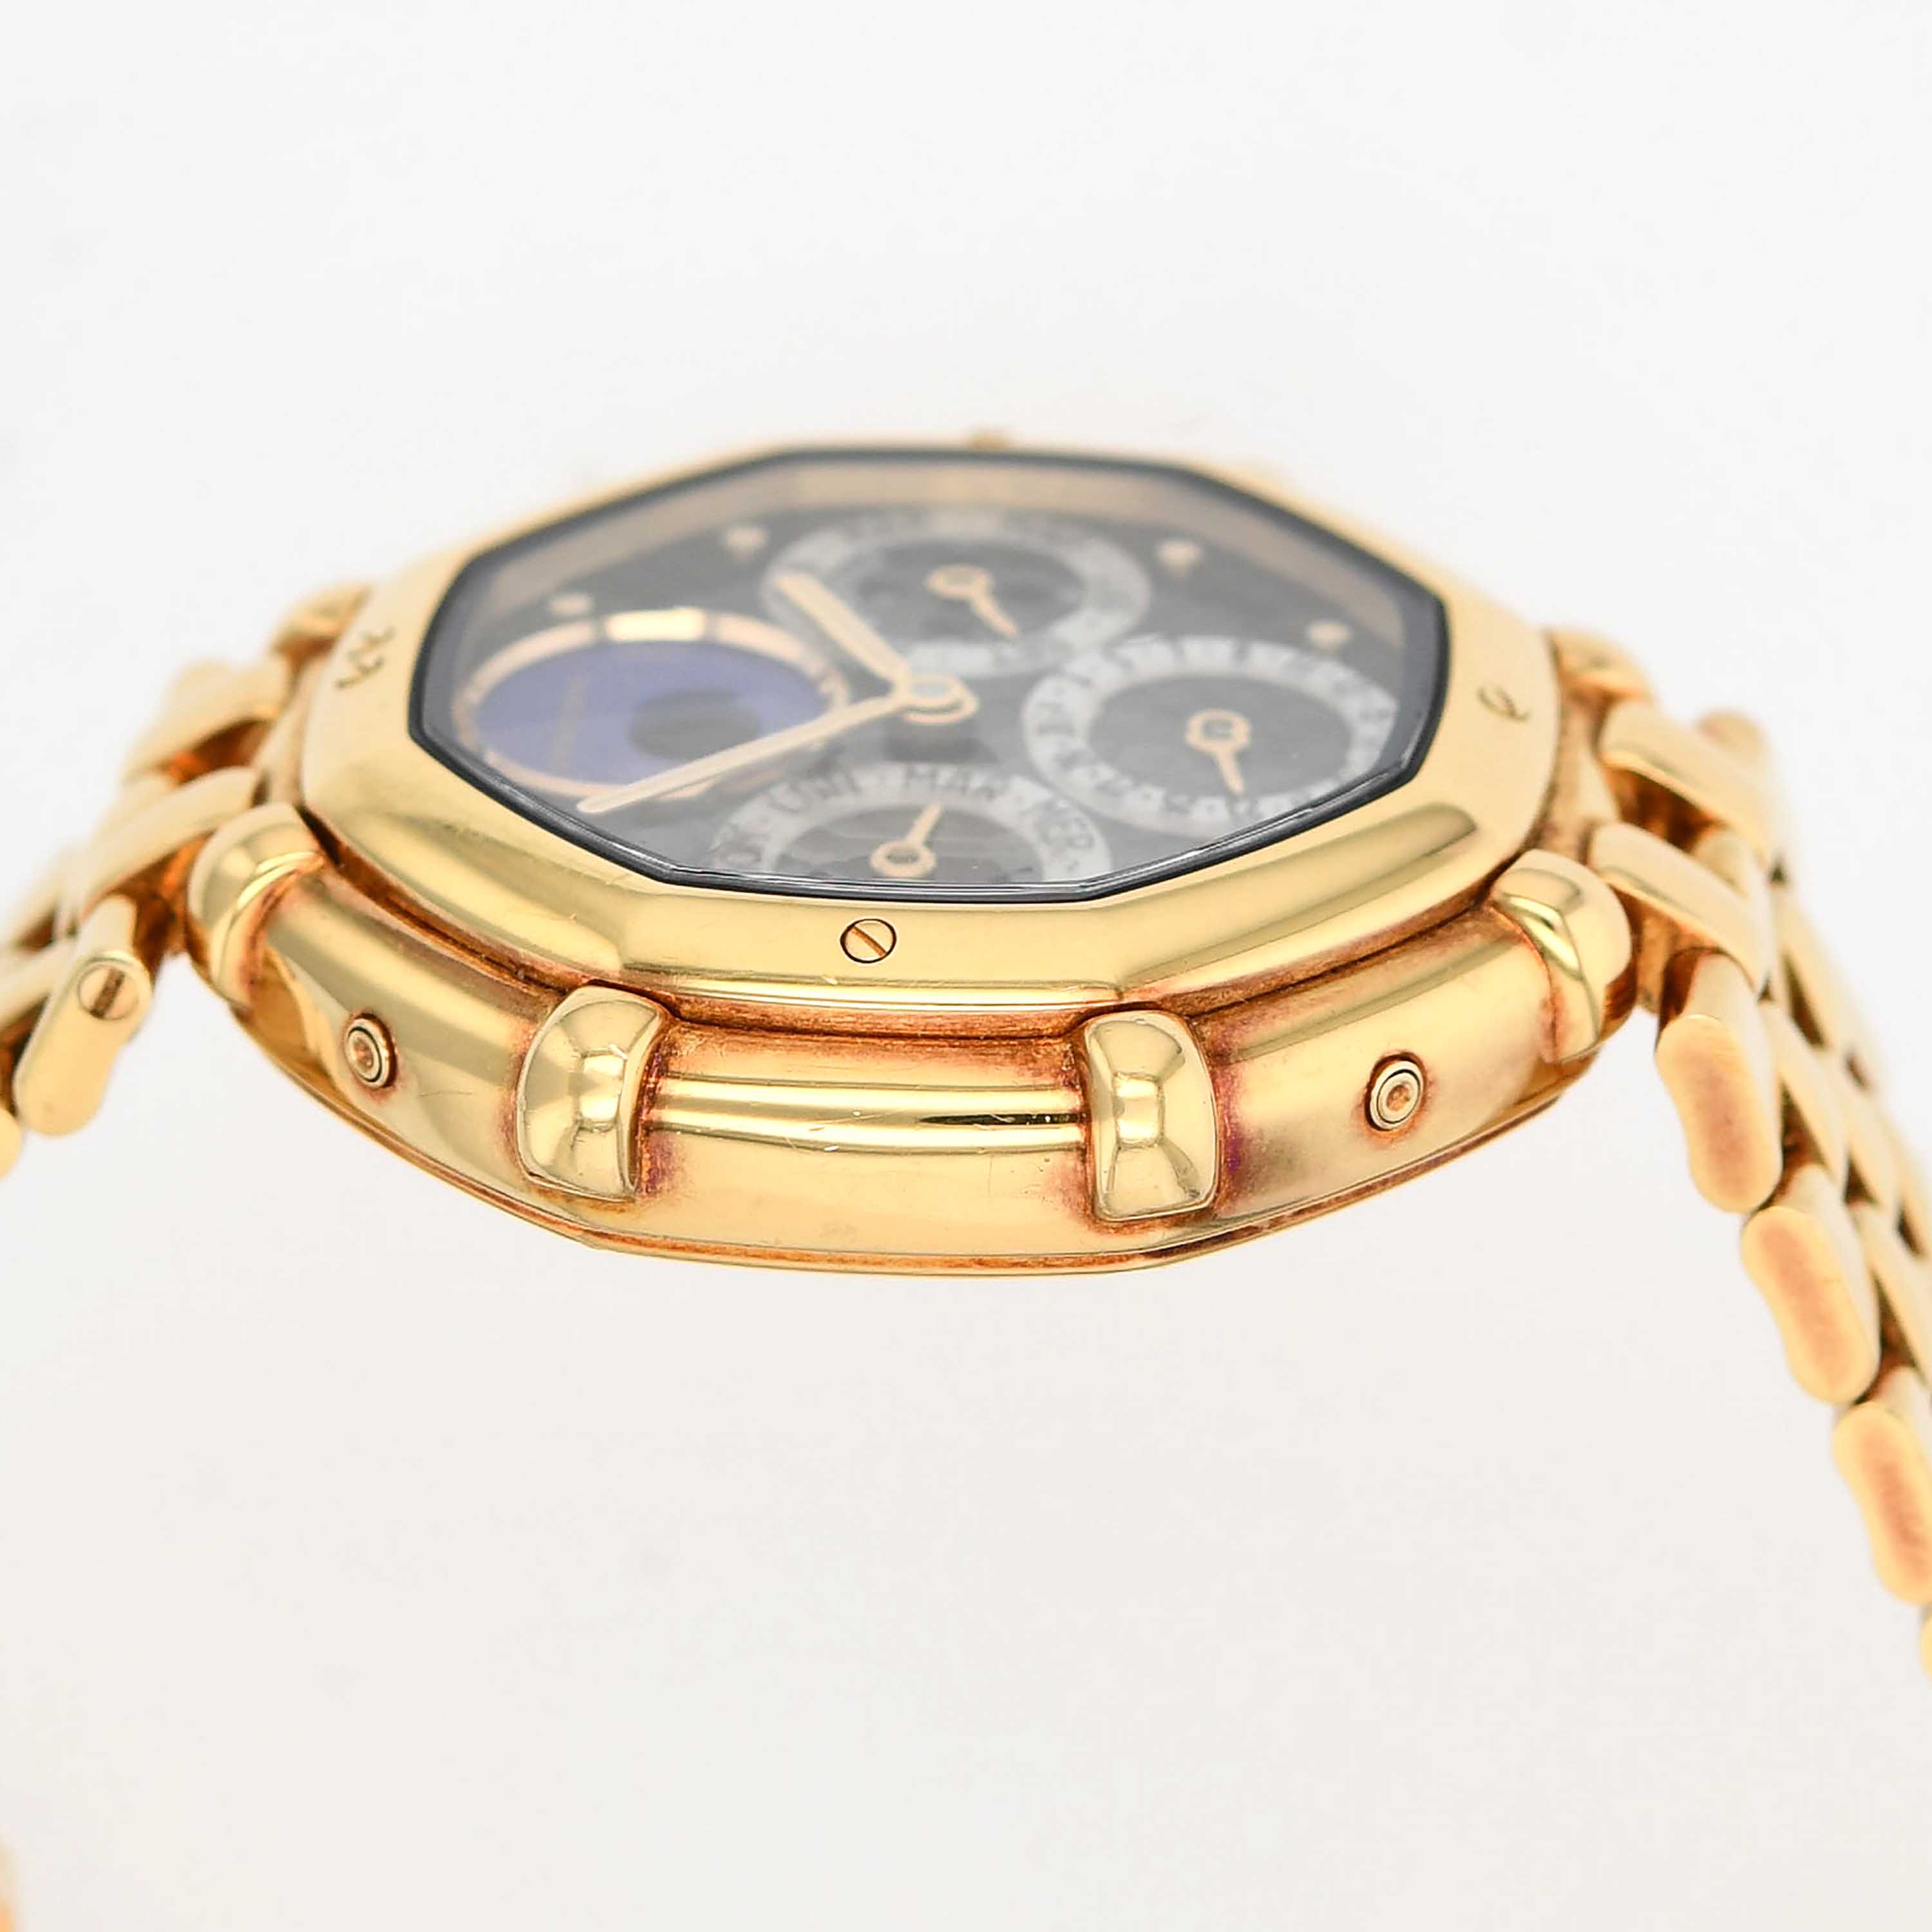 Gerald-genta-success-g33747-automatic-carbon-dial-bracelet-watch-img-main7